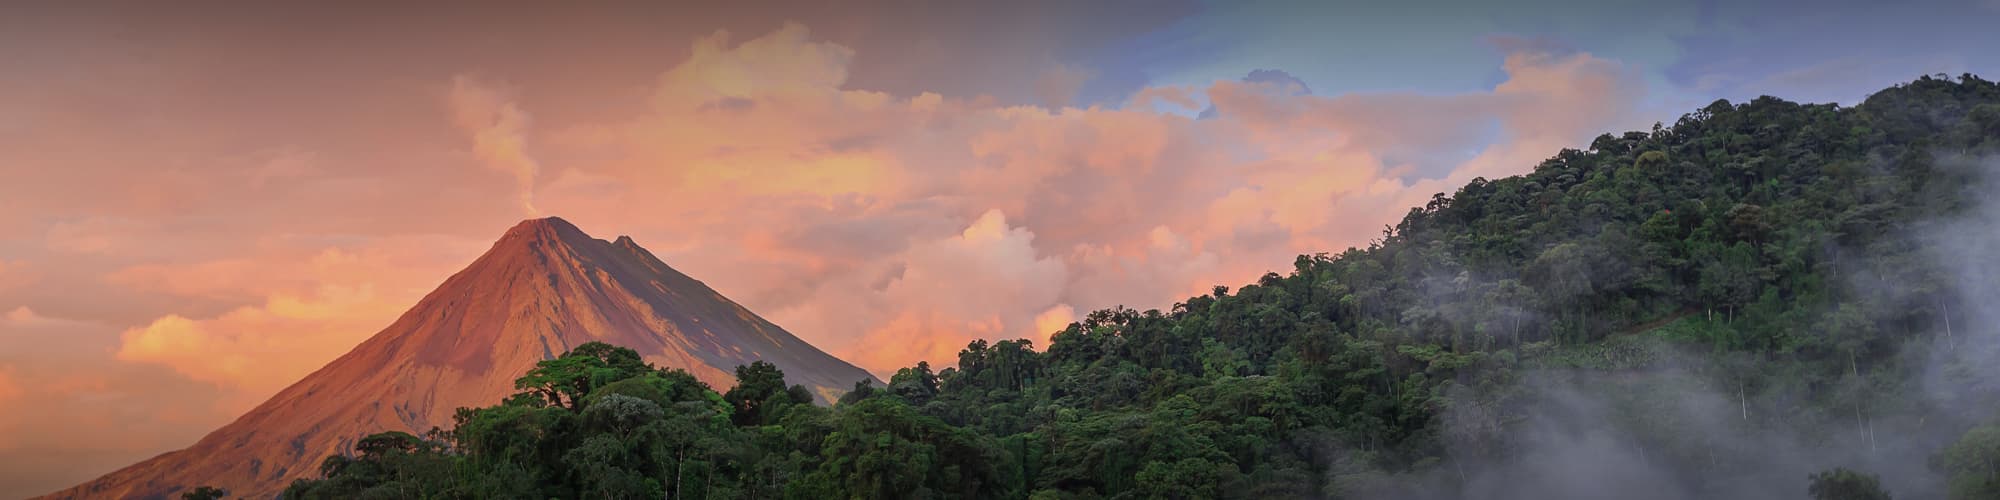 Trek Costa Rica © photodiscoveries / Adobe Stock